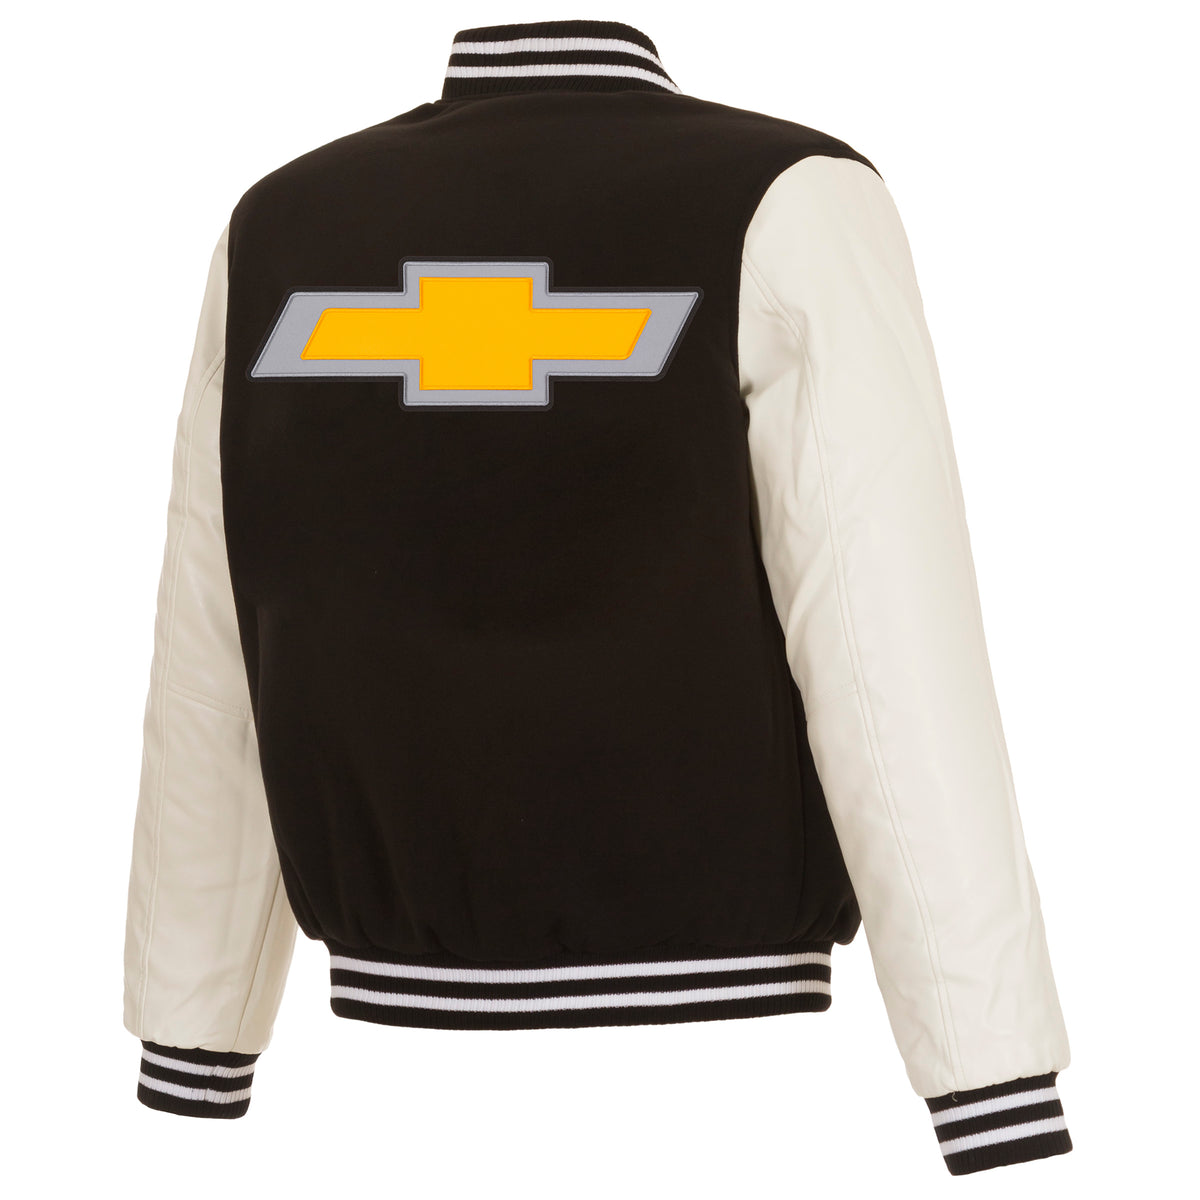 JH Design Las Vegas Raiders Wool & Leather Reversible Jacket w/ Embroidered Logos - Black Medium